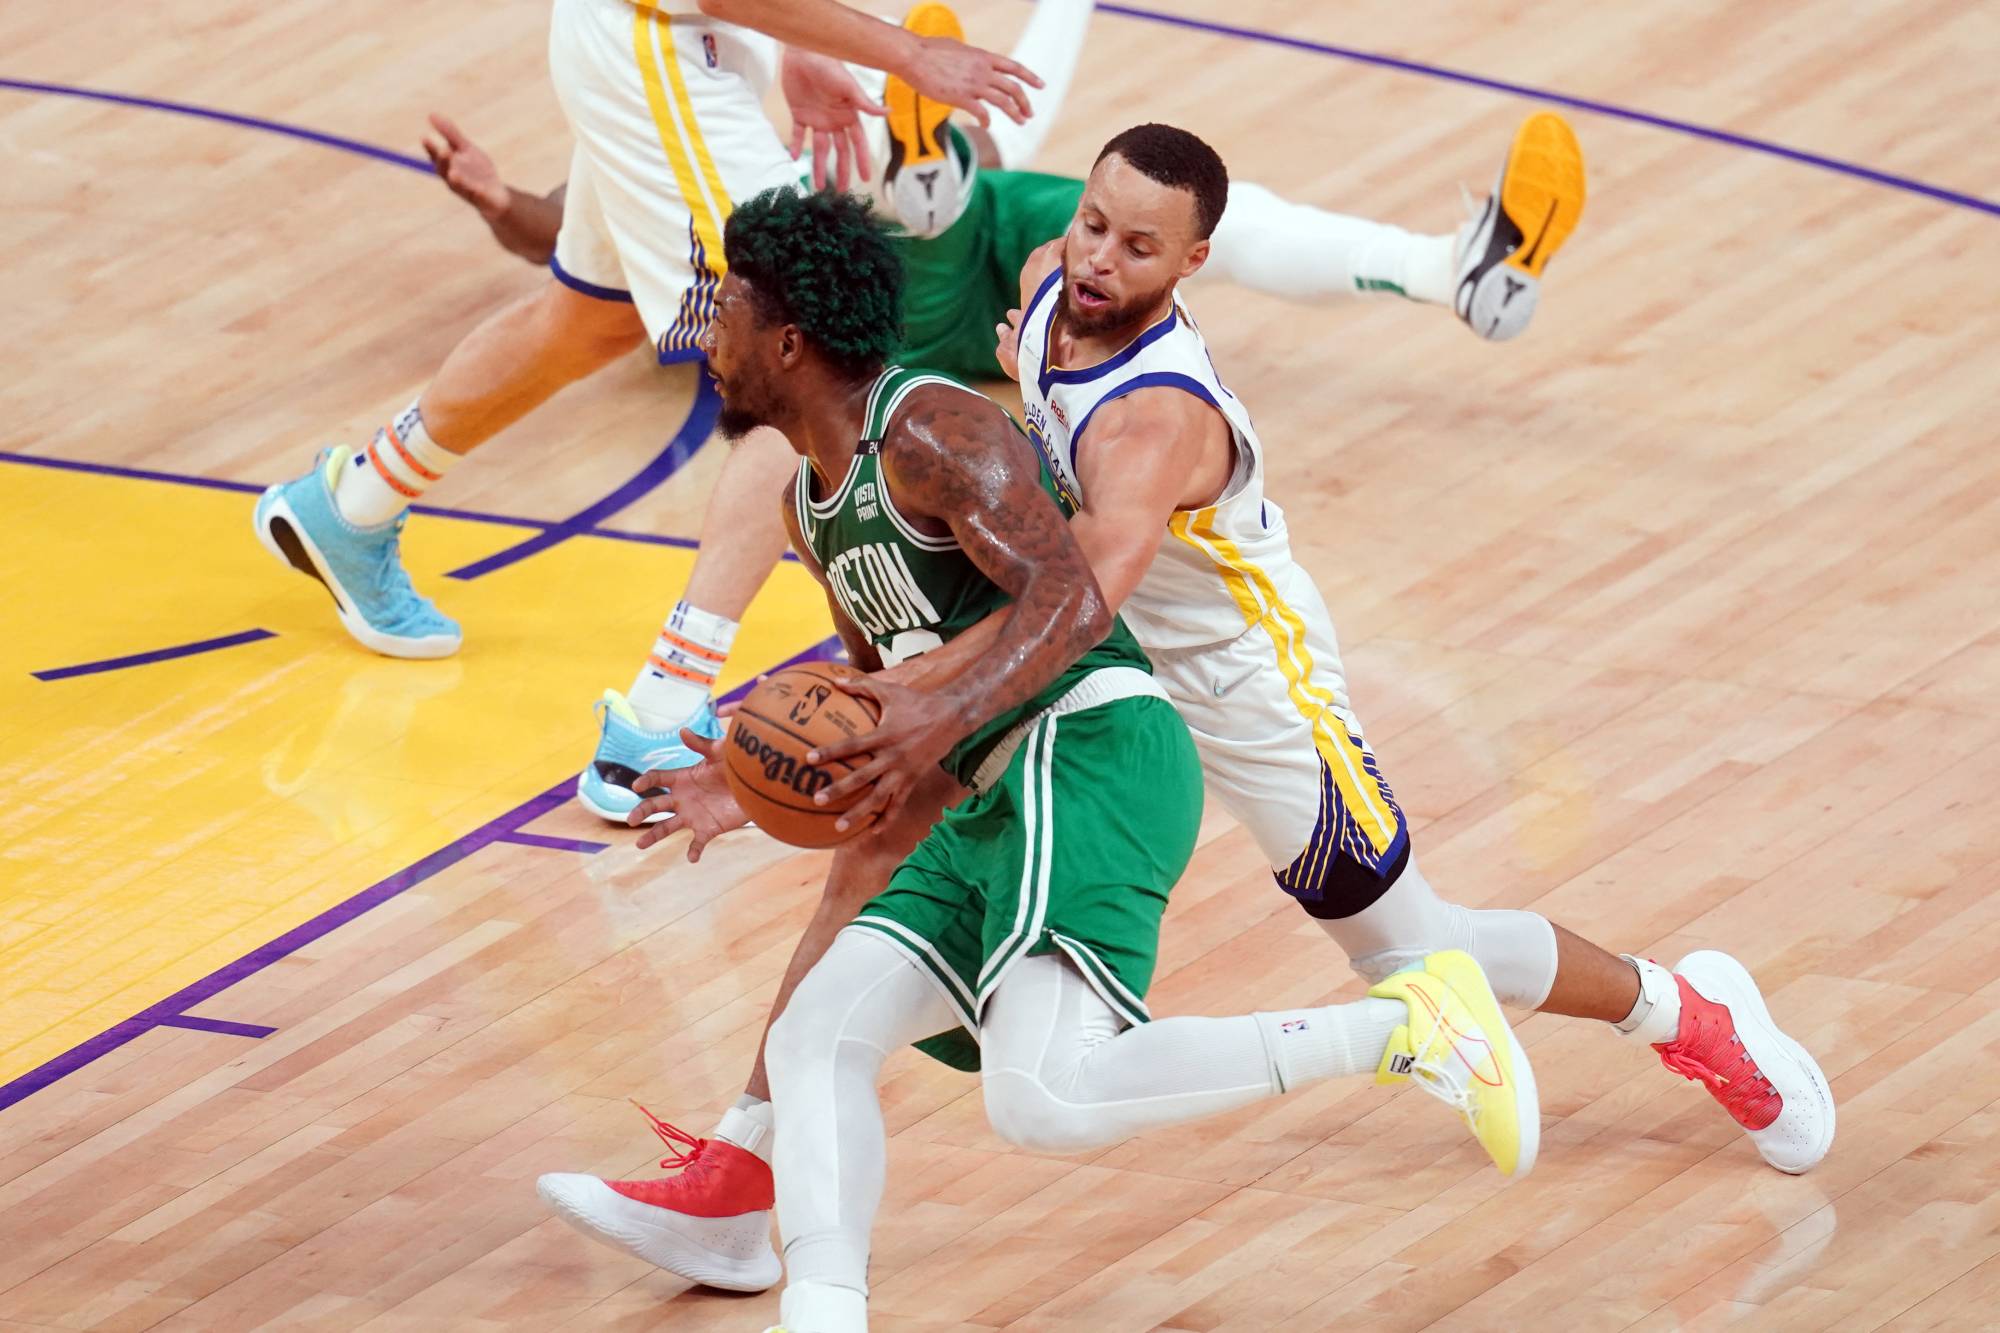 Warriors to Face Boston Celtics in 2022 NBA Finals